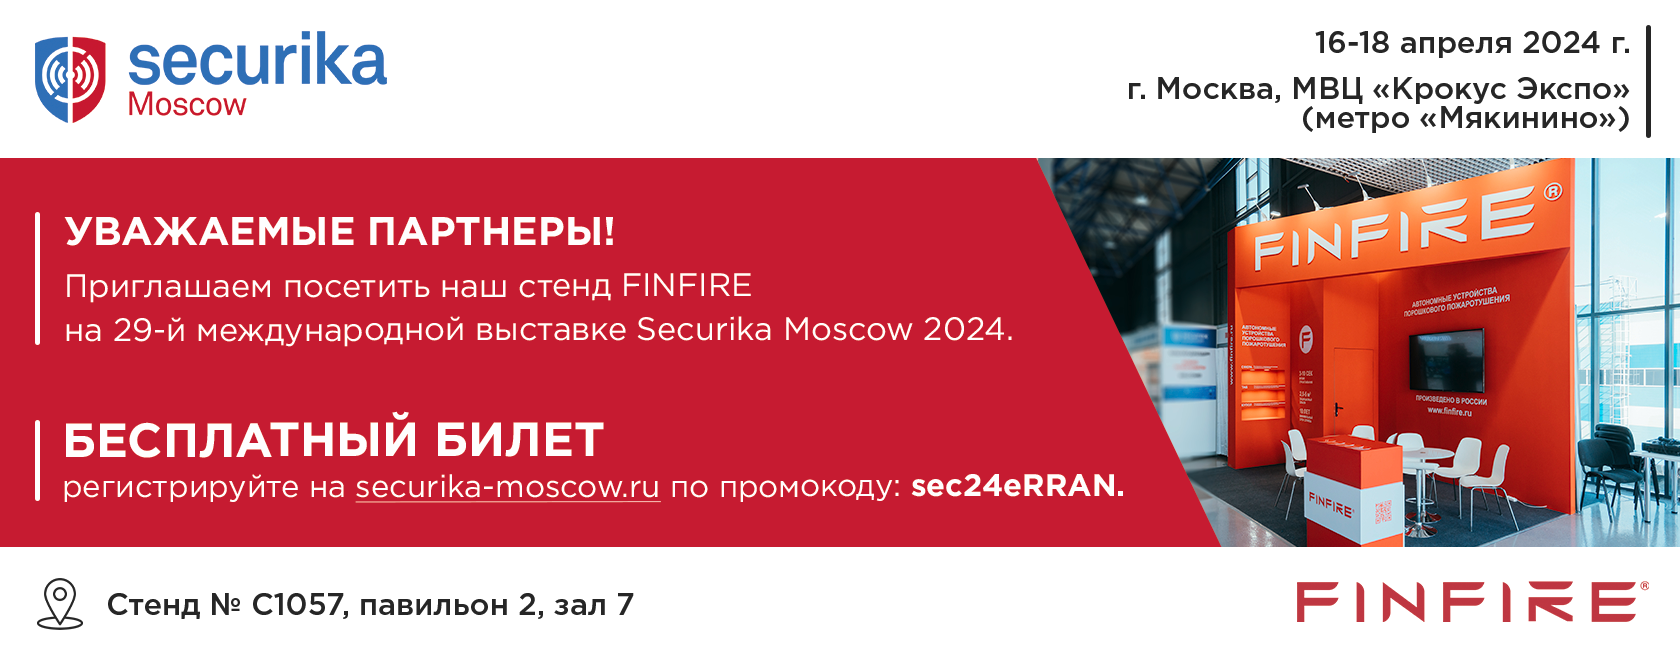 FINFIRE. Выставка Securika 2024